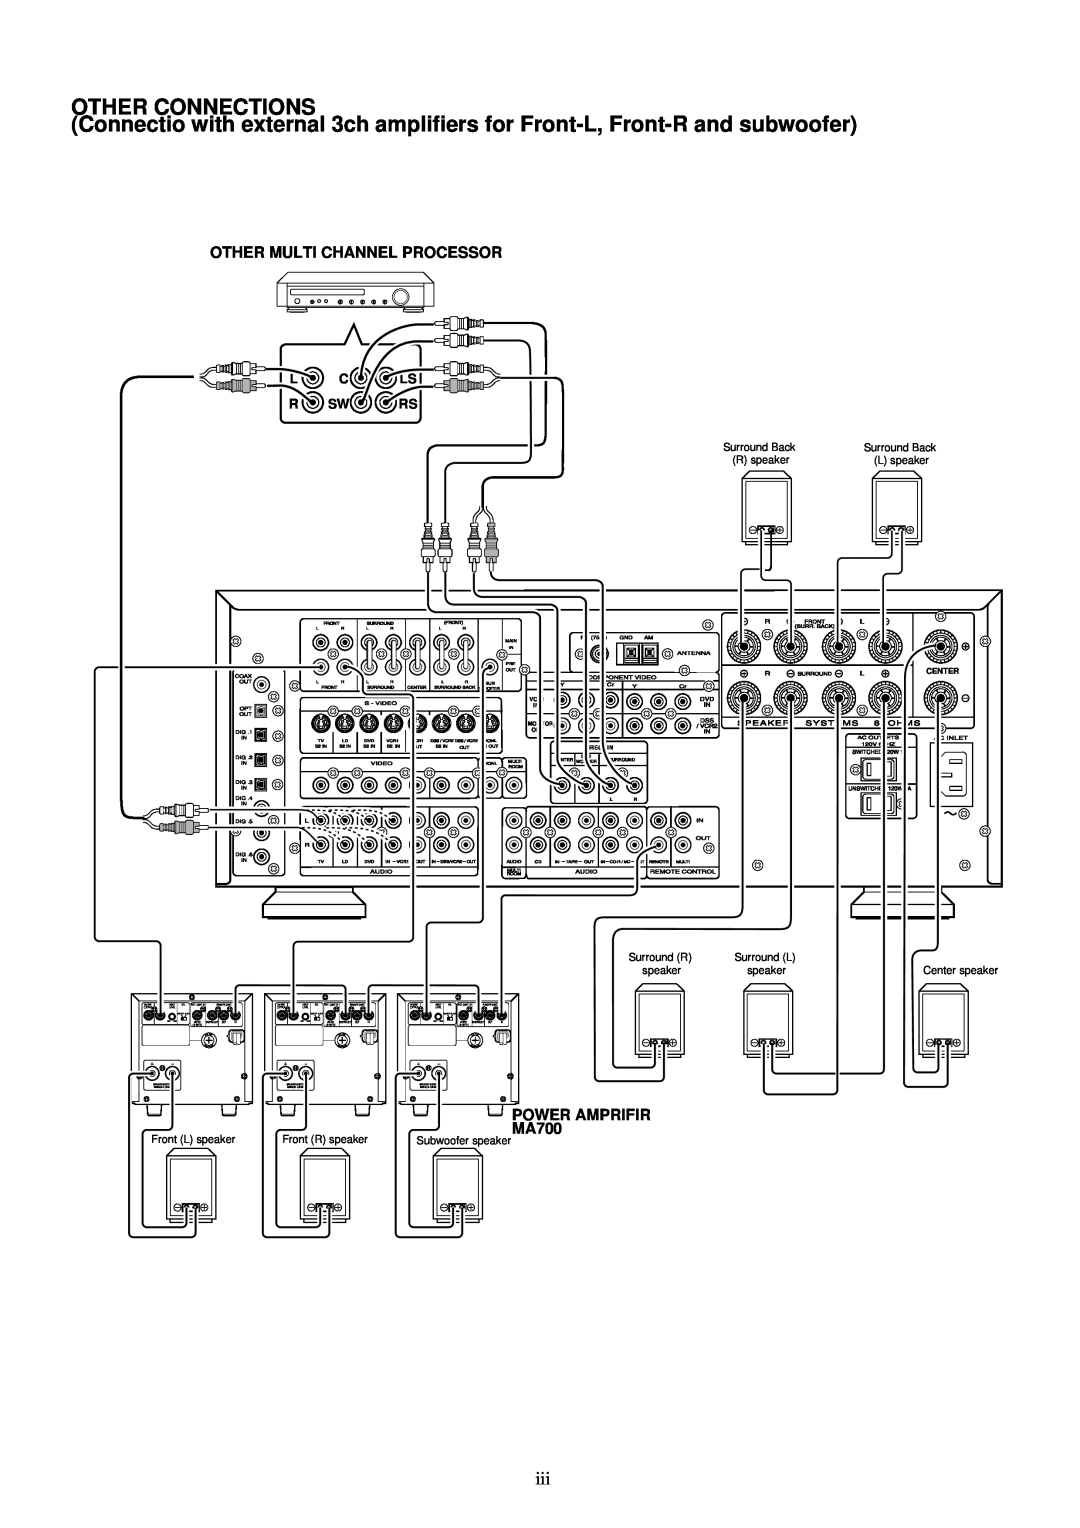 Marantz SR-18EX manual Other Connections, Other Multi Channel Processor, POWER AMPRIFIR MA700, L Cls R Swrs 